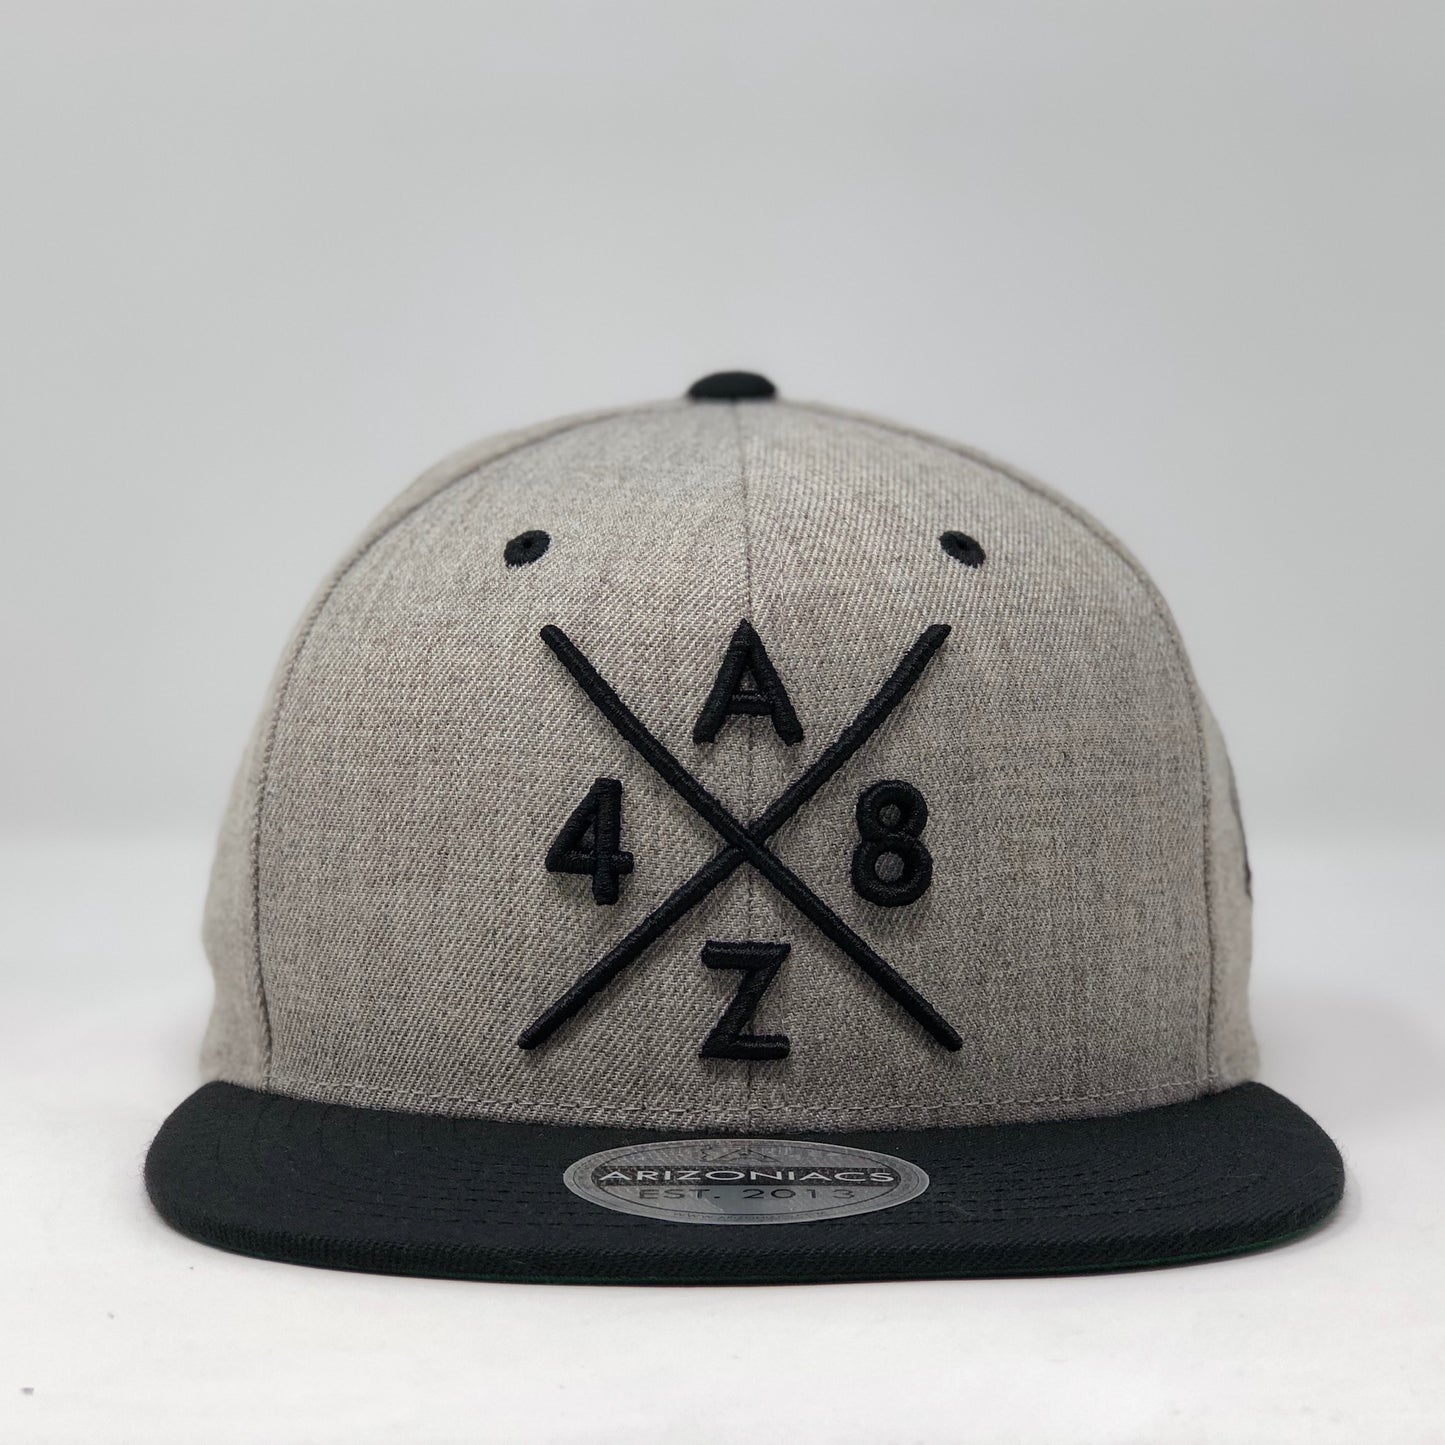 AZ48 Compass Flatbill Snapback Cap - Grey/Black